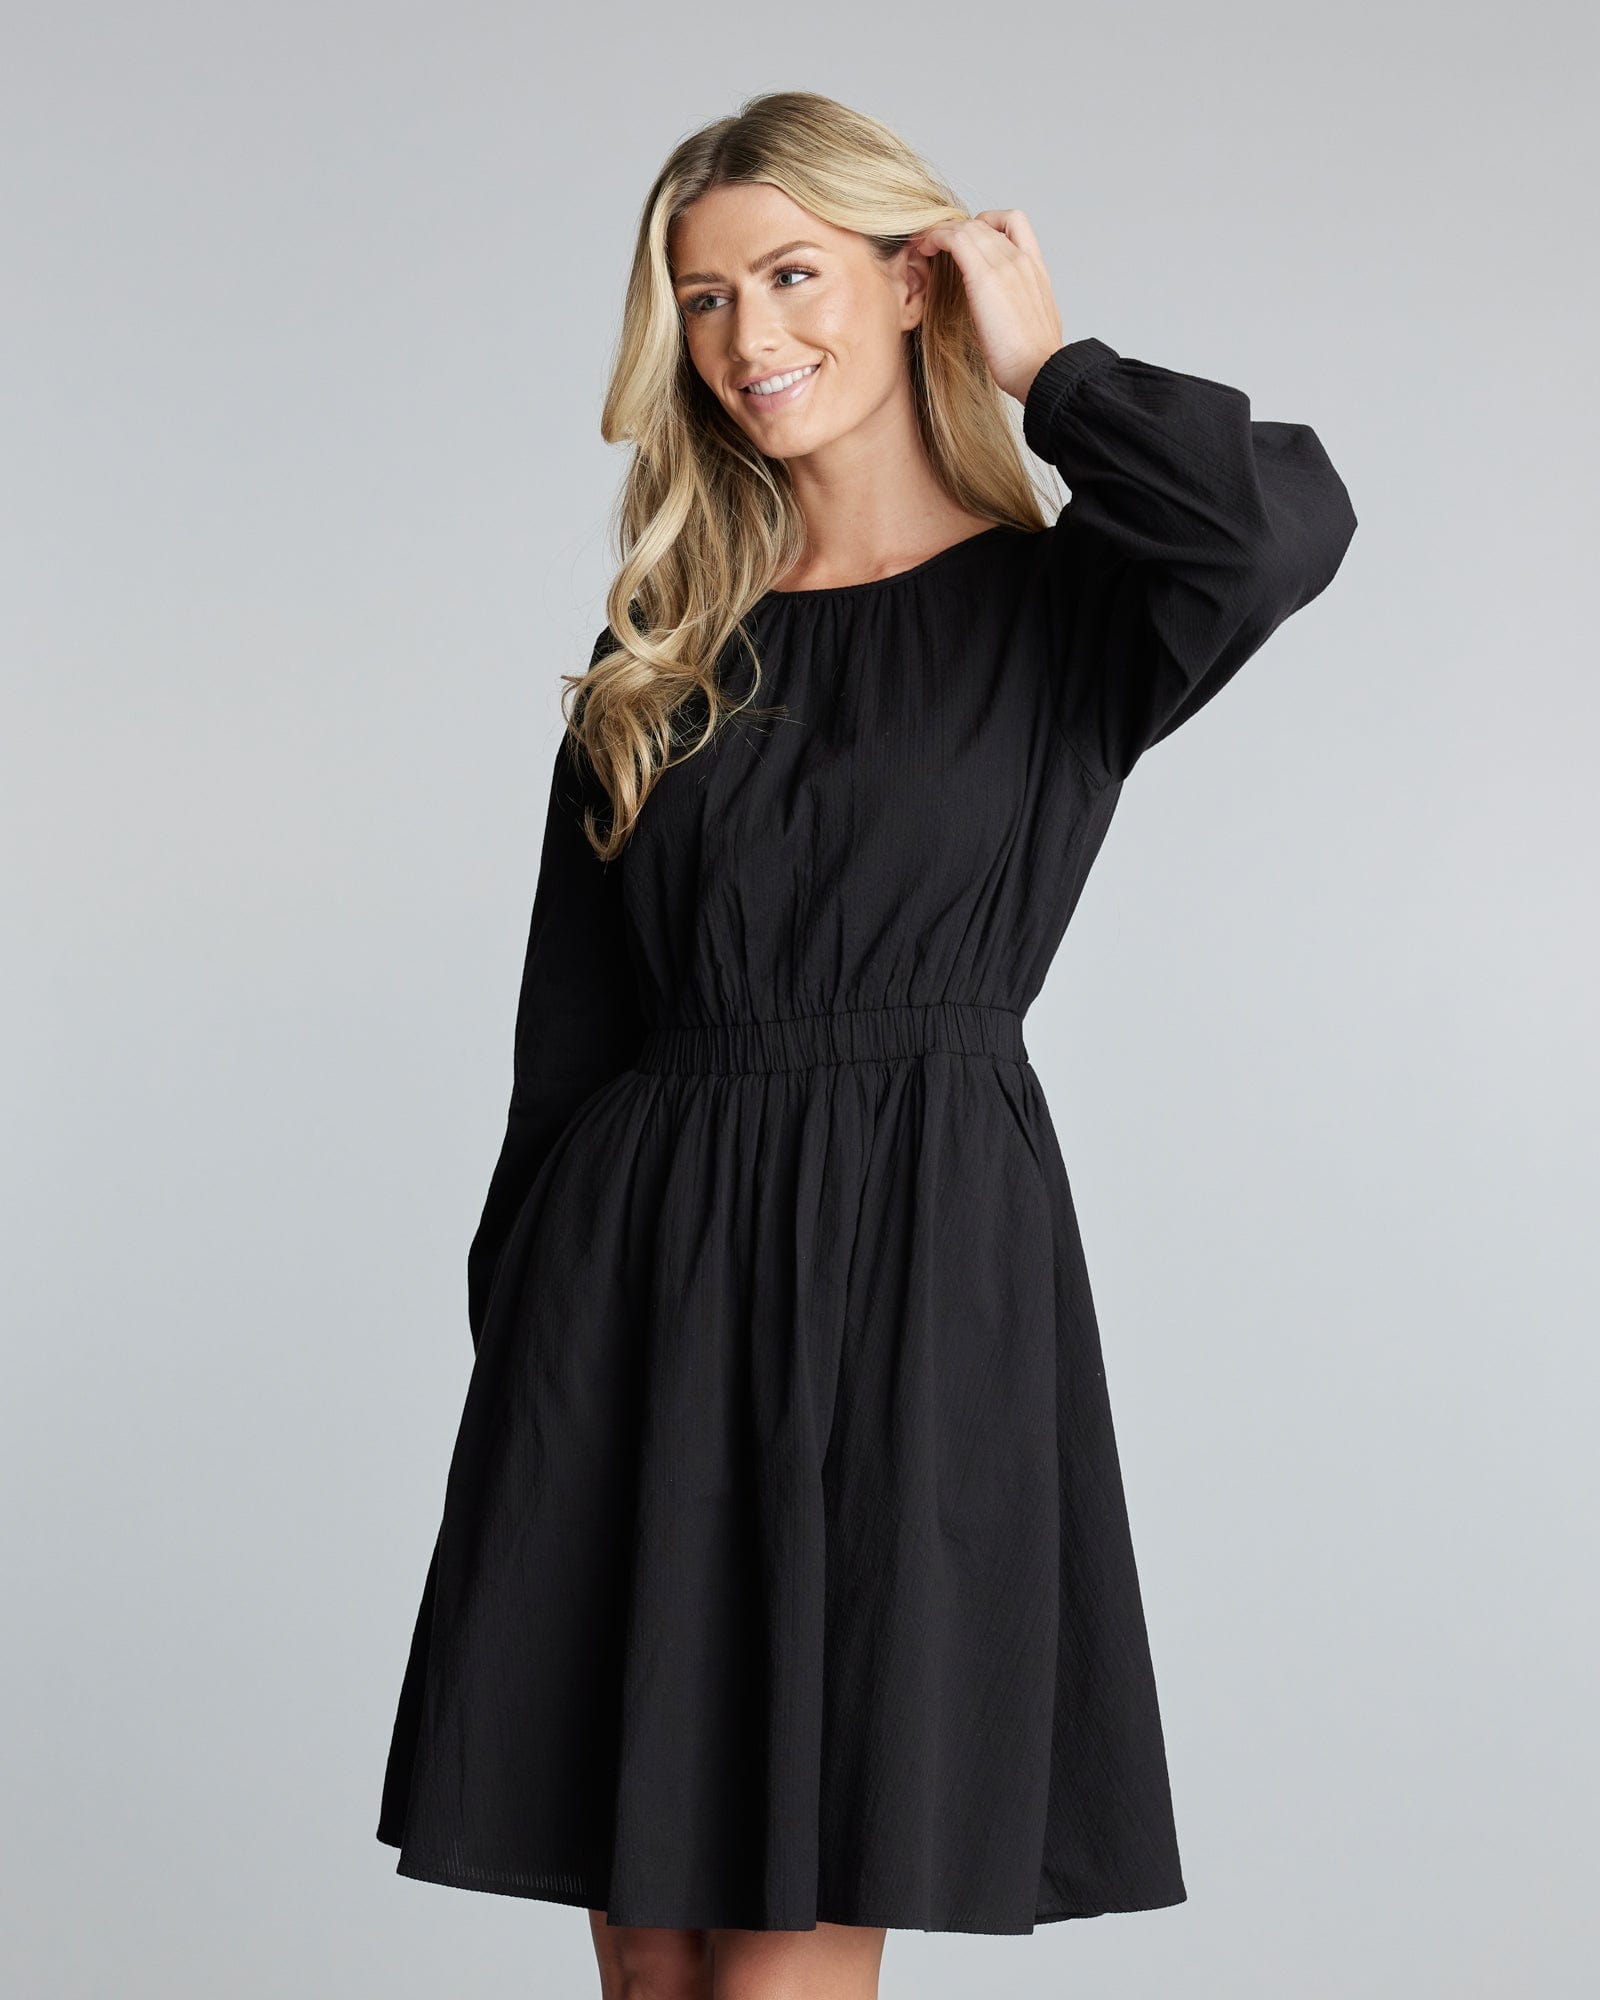 Woman in a black long sleeve, knee-length dress.